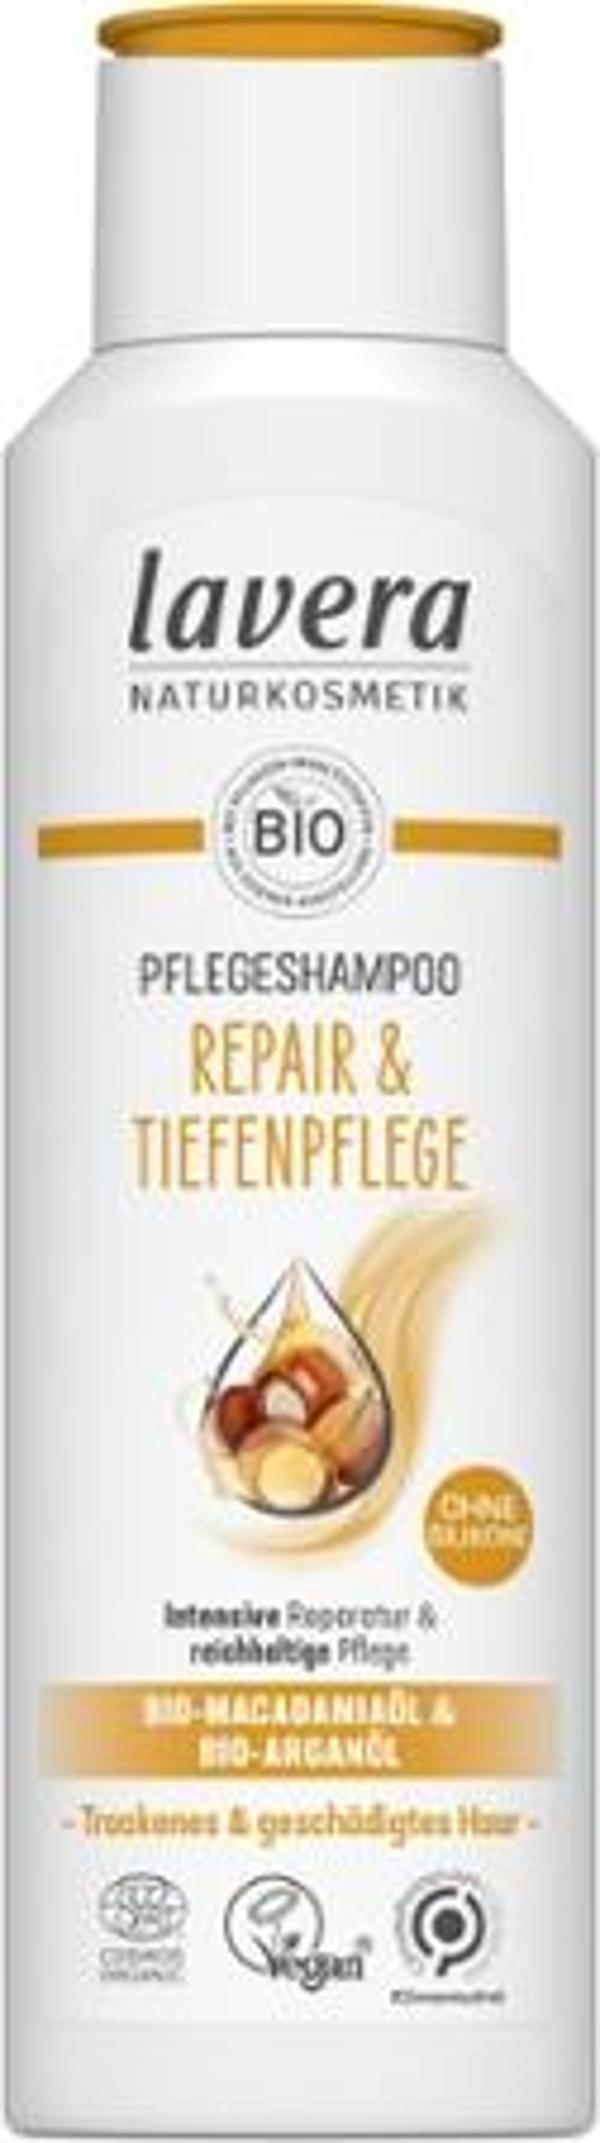 Produktfoto zu Expert Repair & Tiefenpflegeshampoo, 250 ml